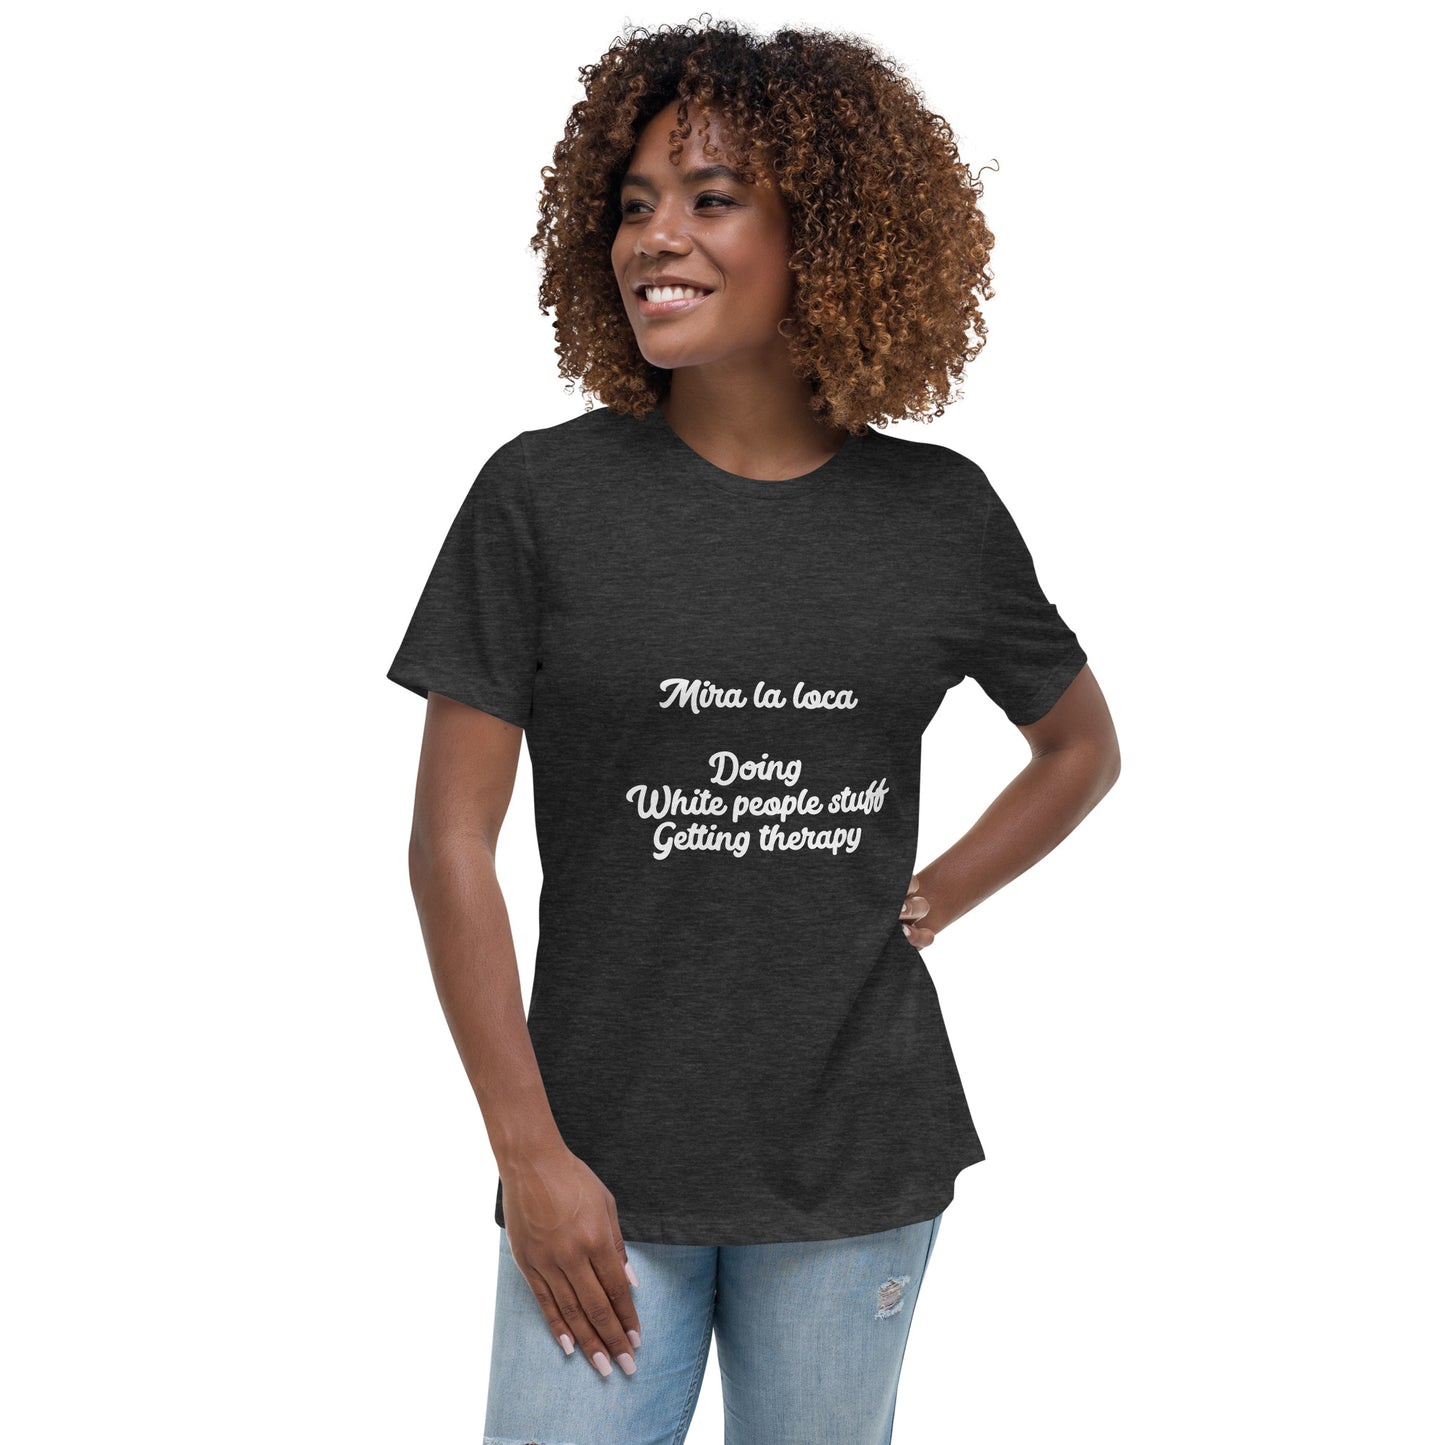 Mira la loca Women's Relaxed T-Shirt